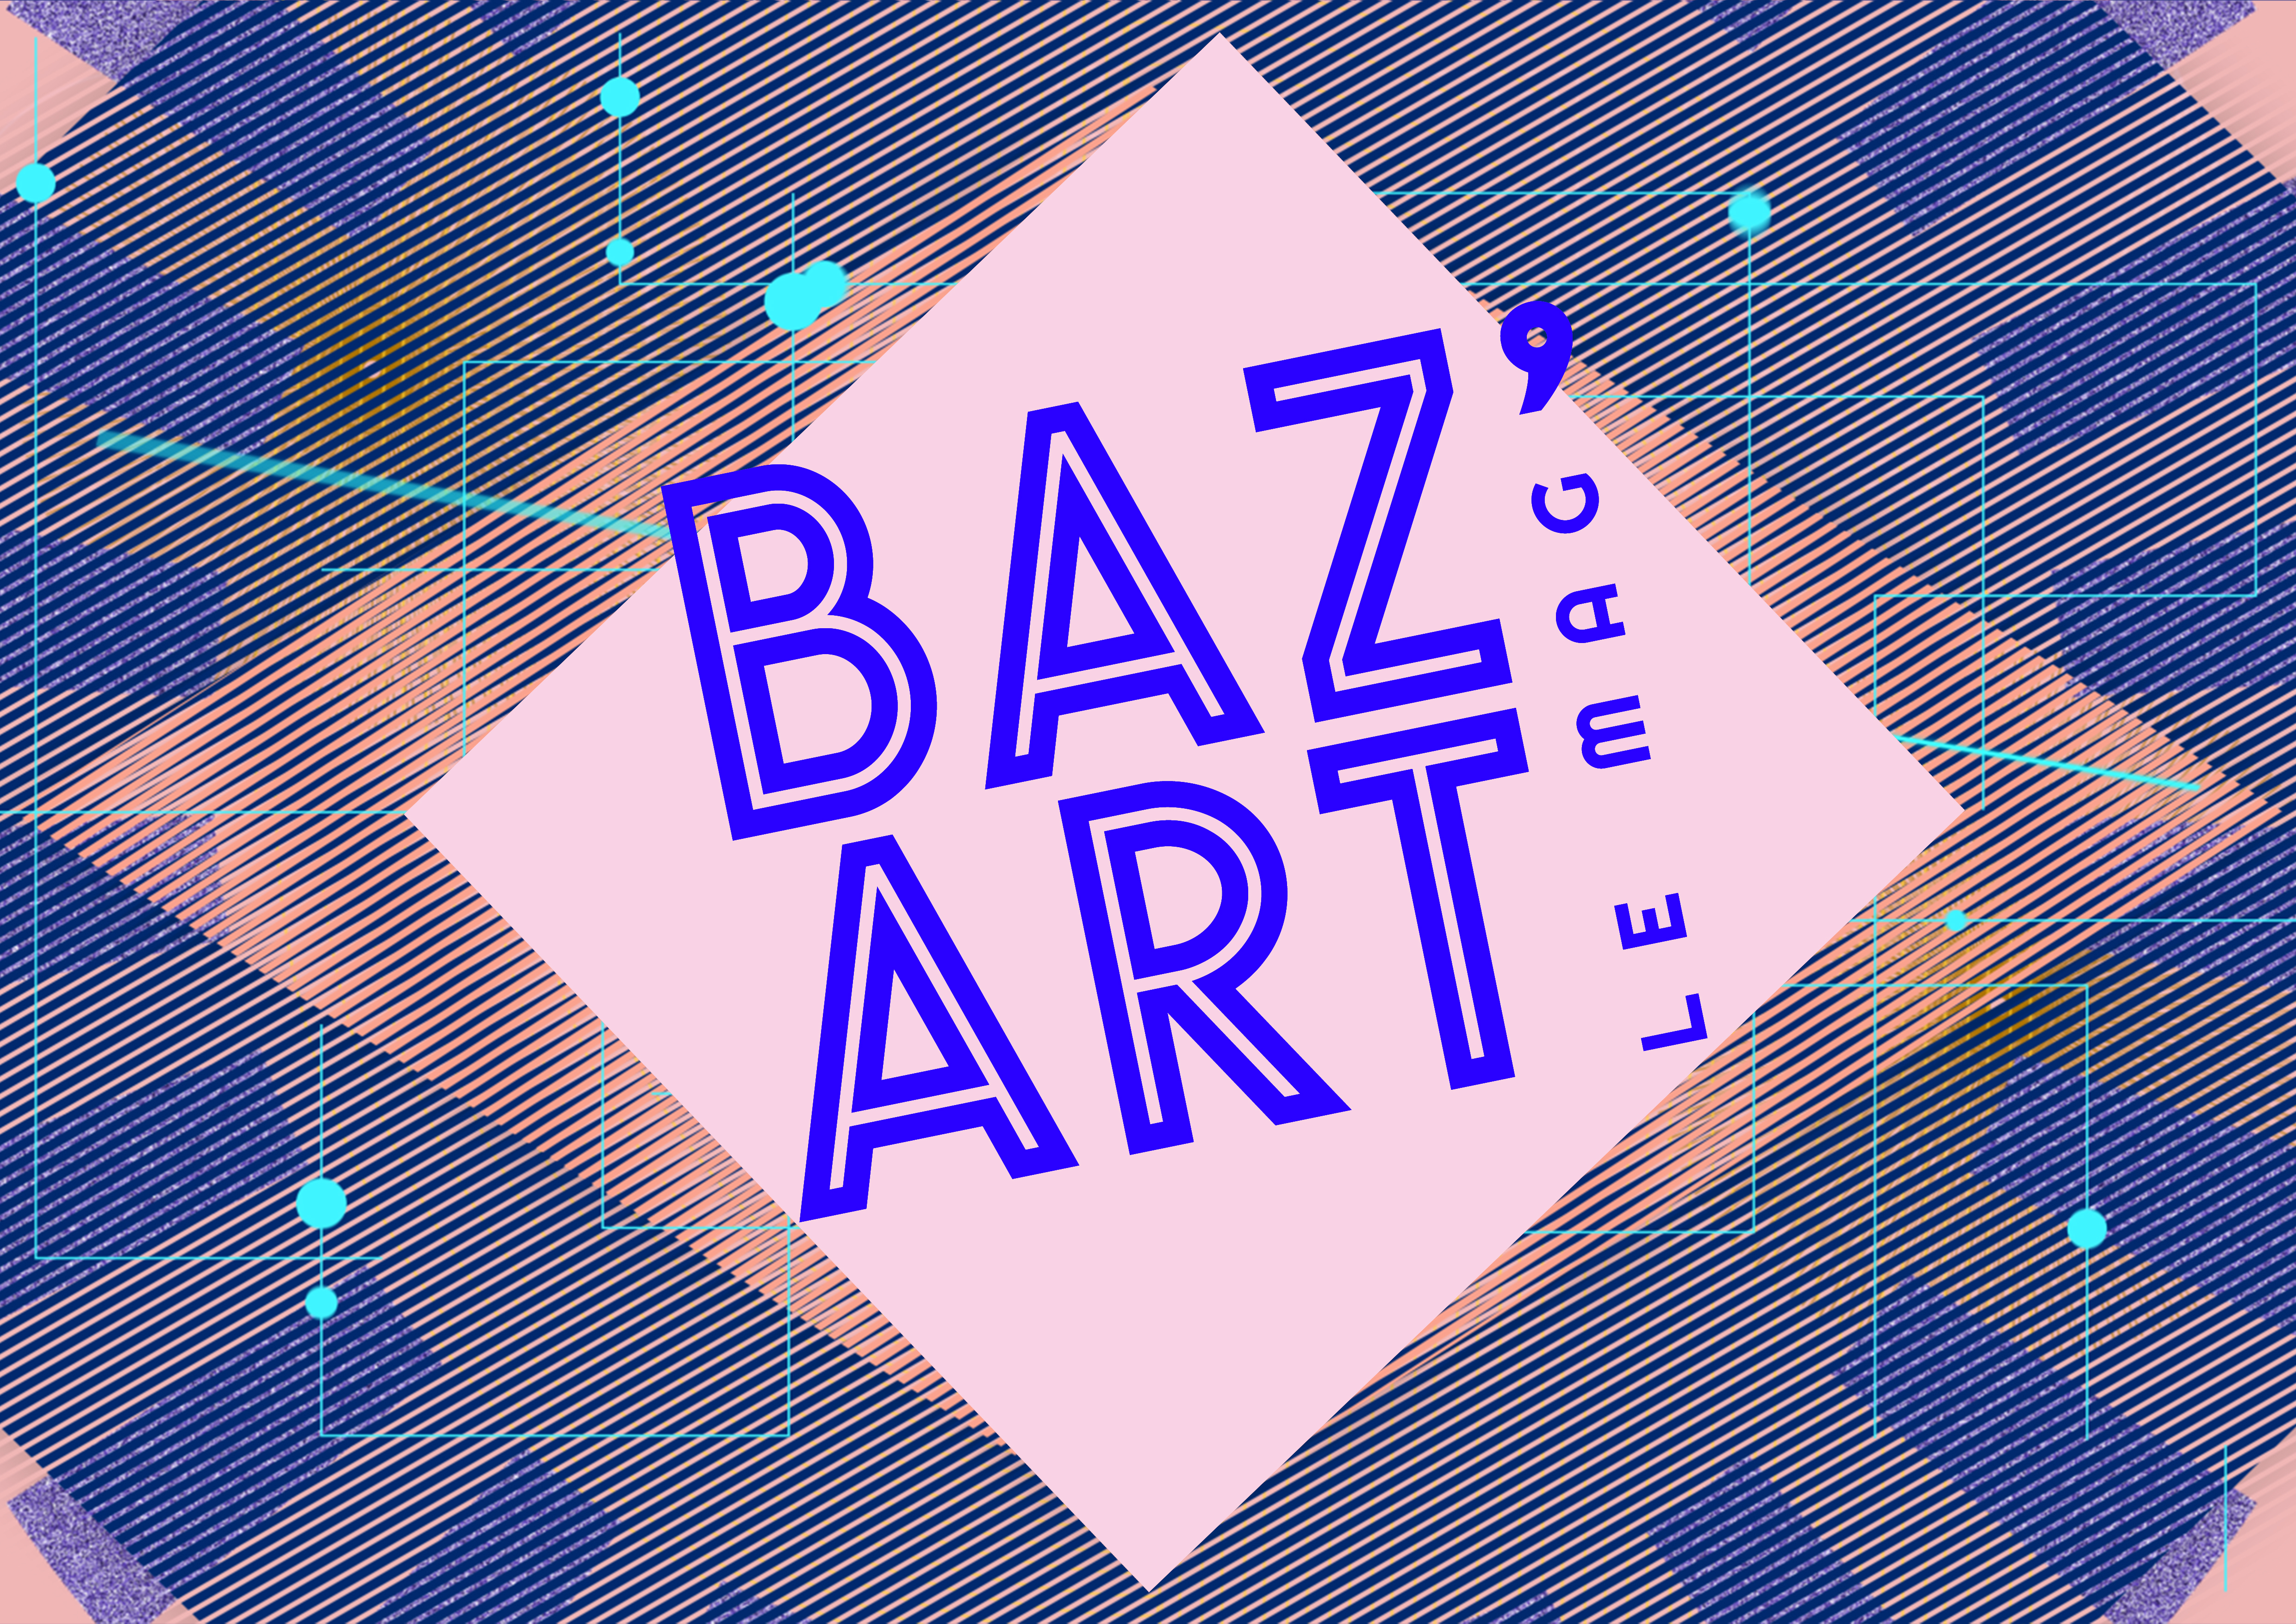 Baz'art le Mag logo